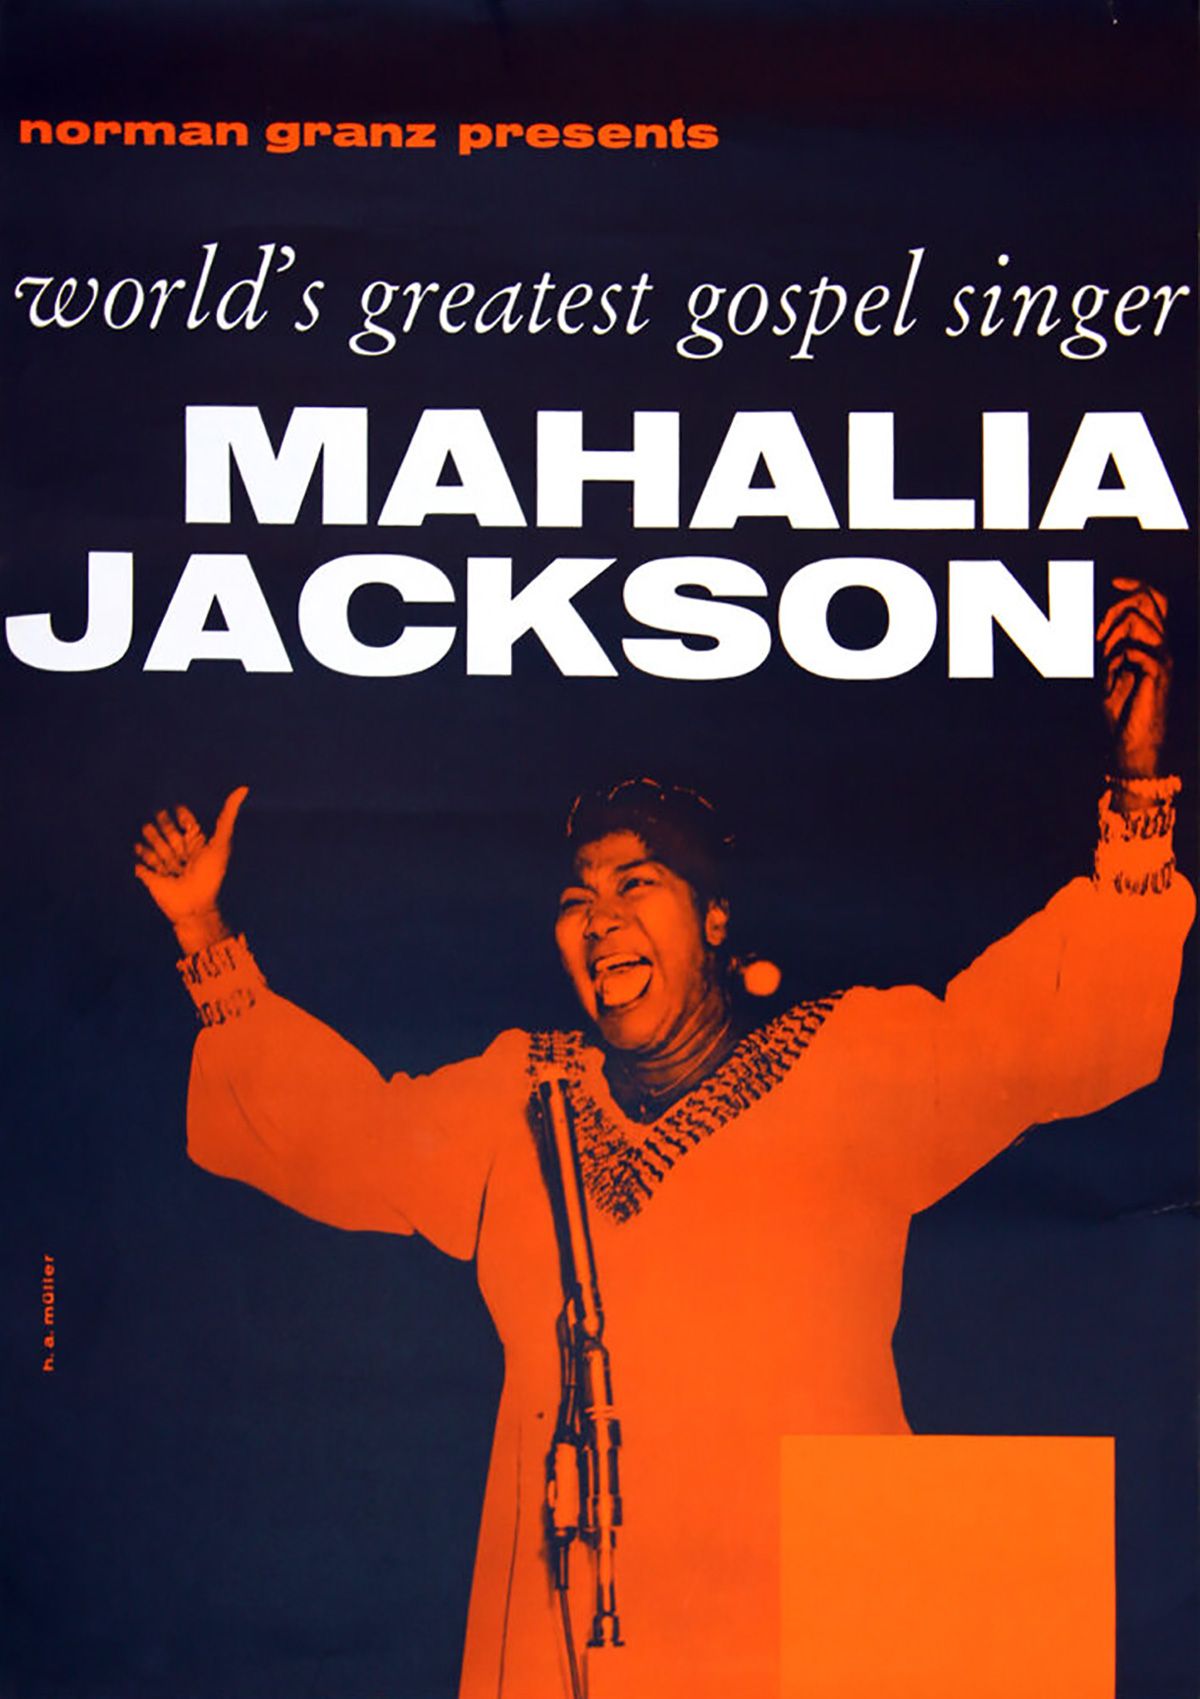 Mahalia Jackson - Gospel Blues Singer